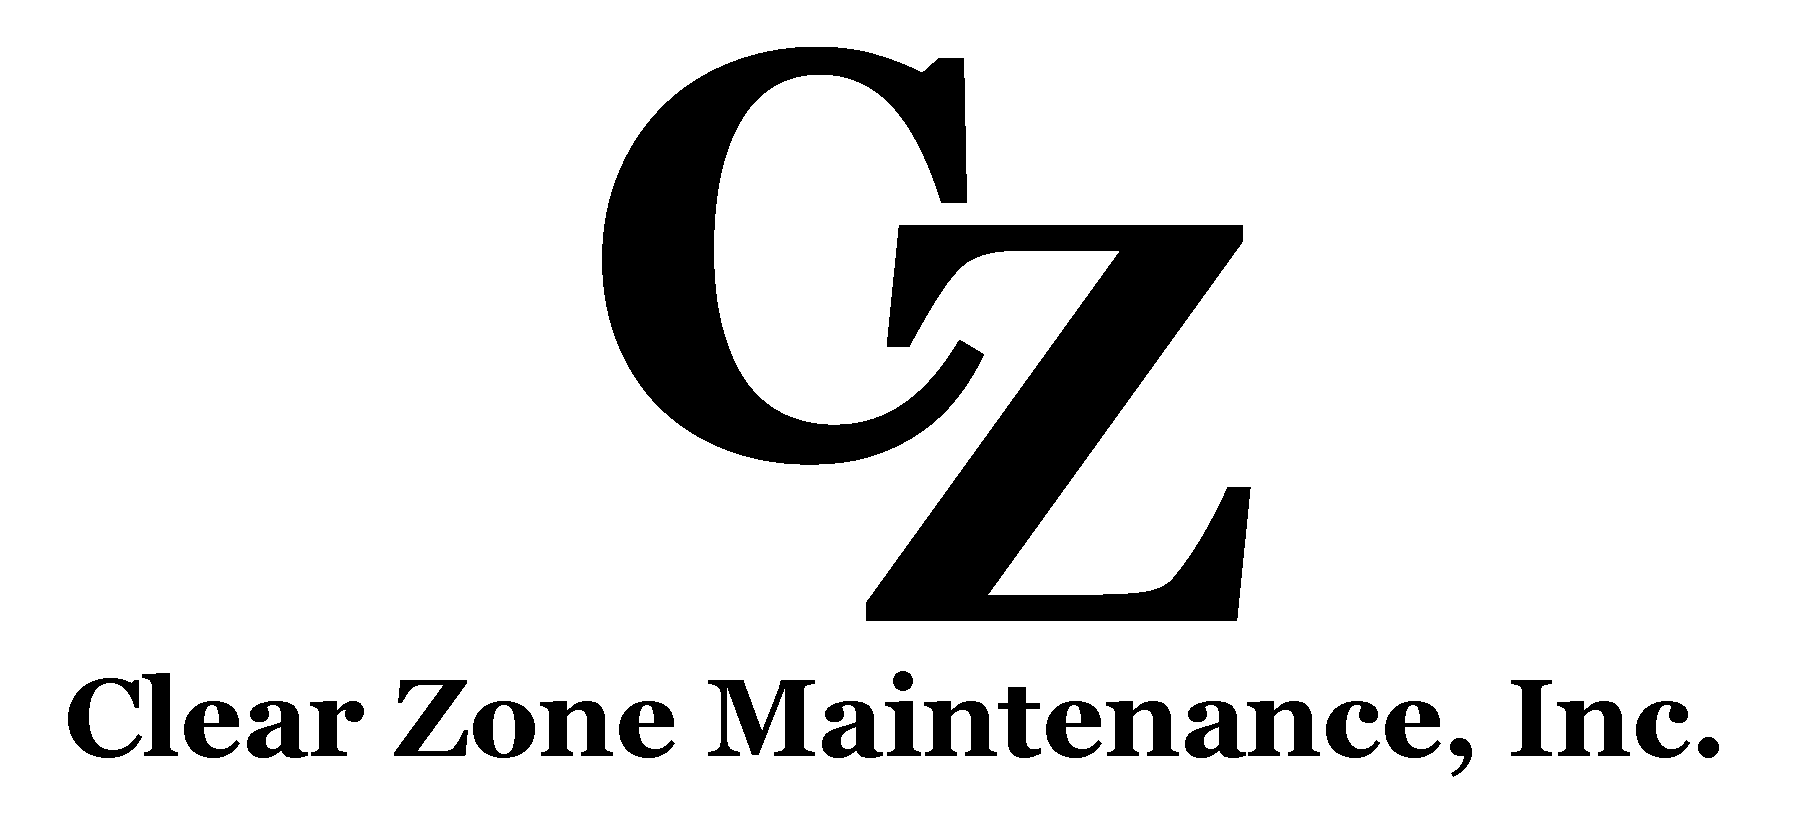 Clear Zone Maintenance, Inc.